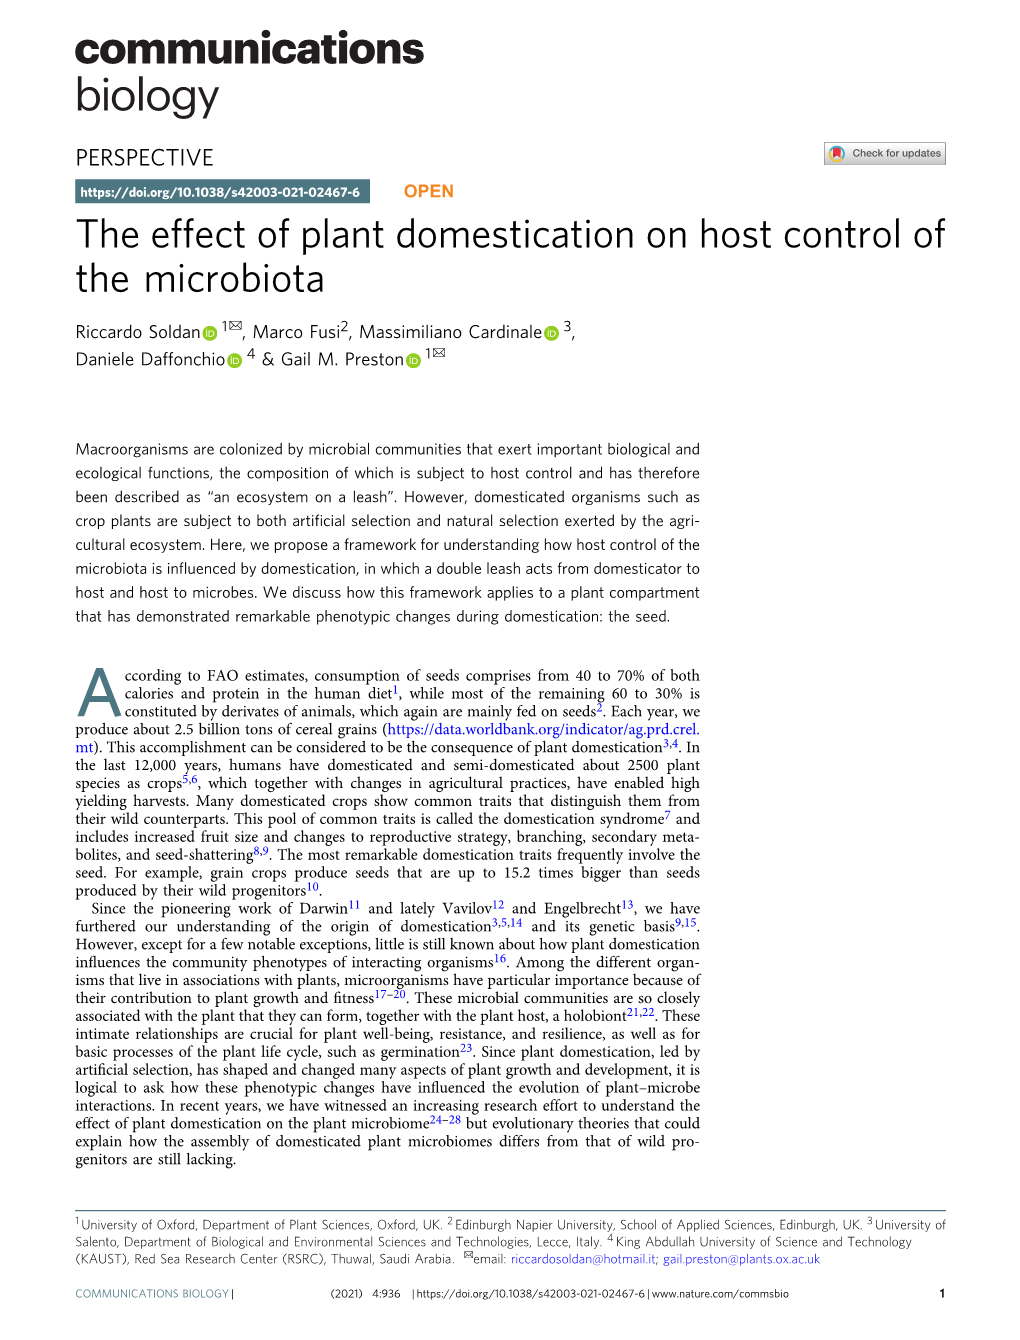 The Effect of Plant Domestication on Host Control of the Microbiota ✉ Riccardo Soldan 1 , Marco Fusi2, Massimiliano Cardinale 3, ✉ Daniele Daffonchio 4 & Gail M